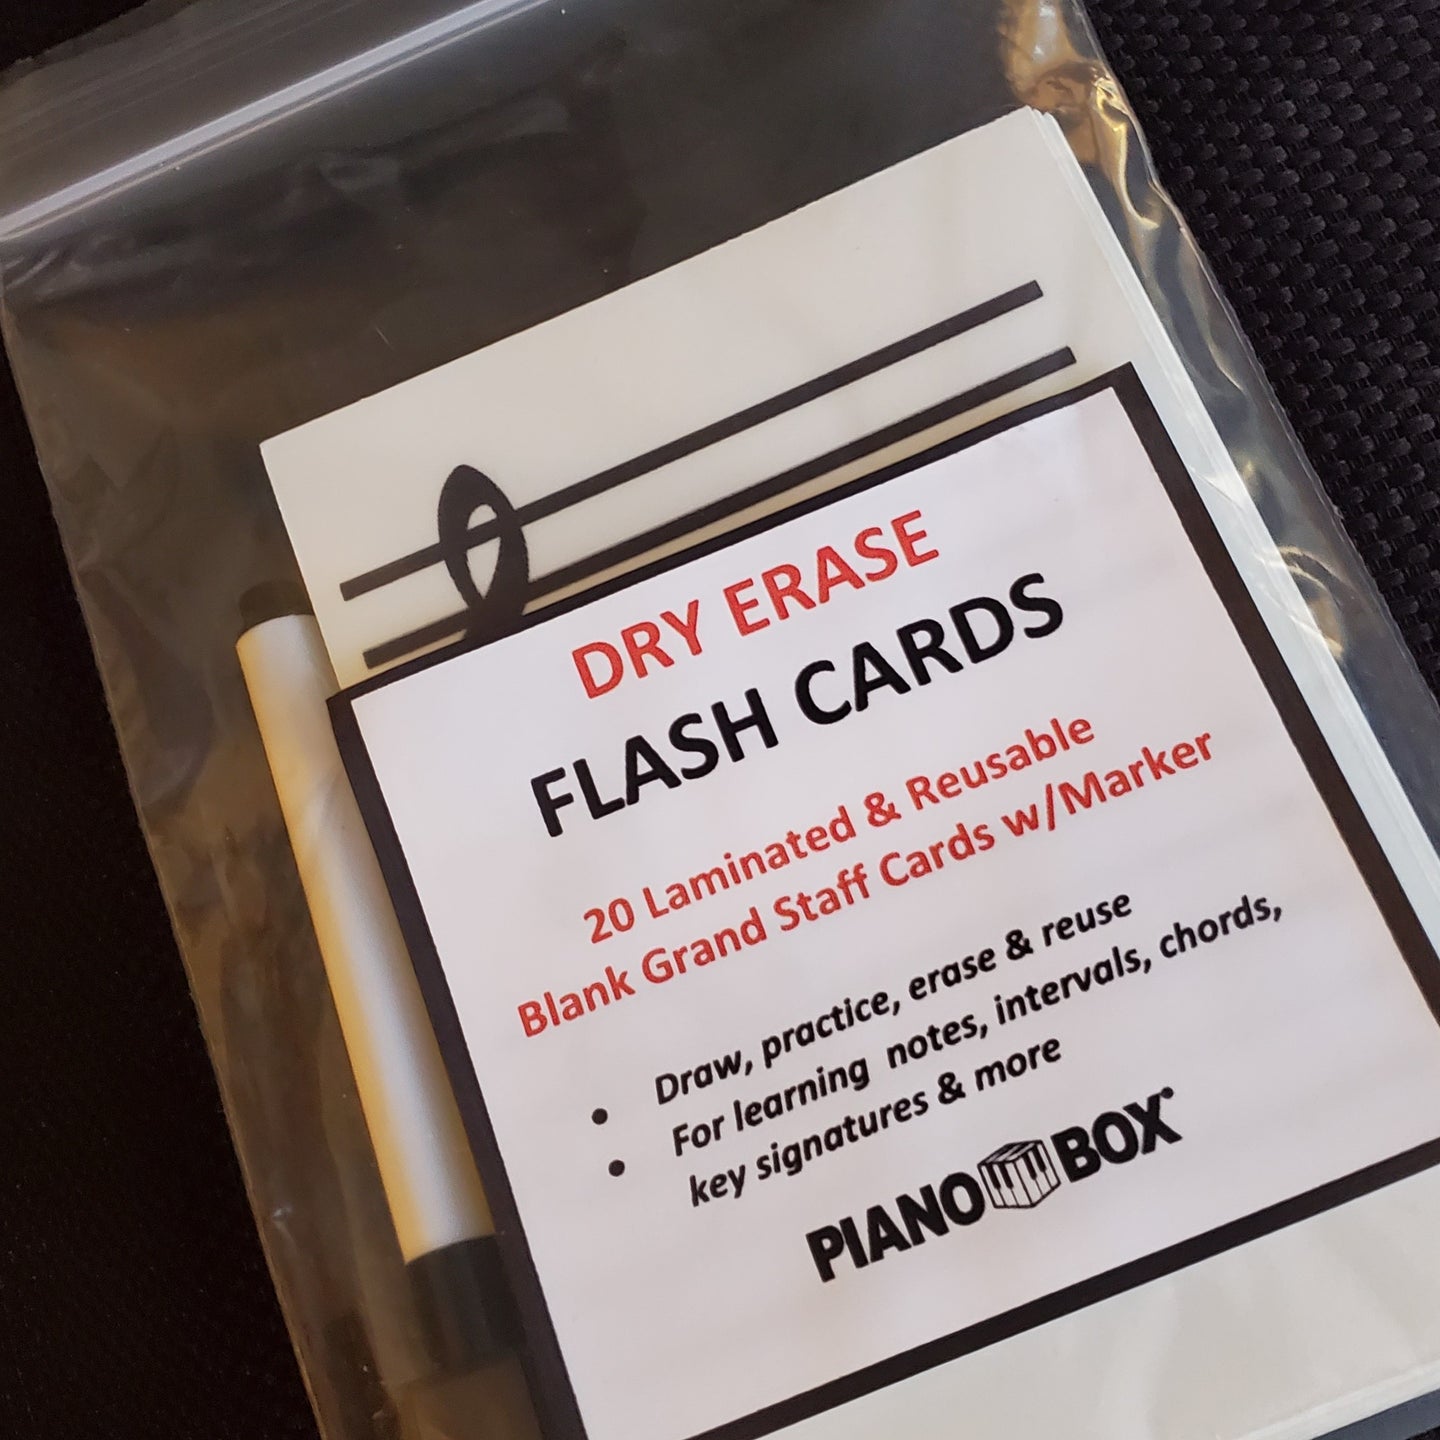 Flash Cards - Dry Erase - Blank Grand Staff (Laminated)